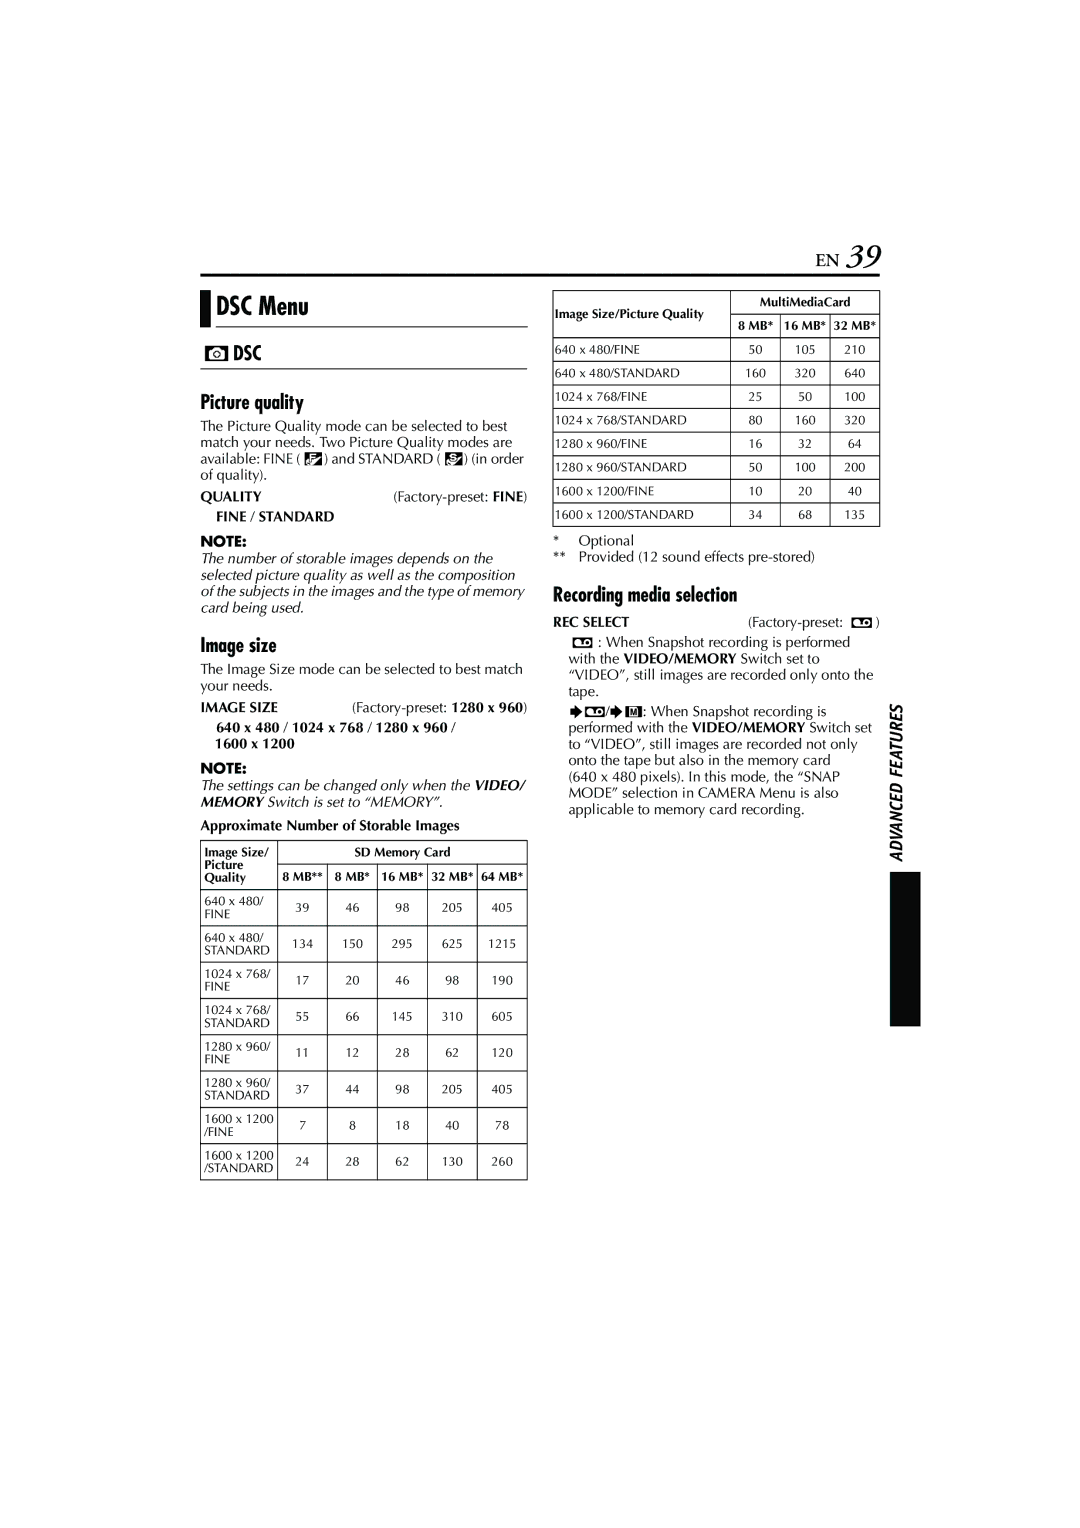 JVC LYT1147-001A manual DSC Menu, Picture quality, Image size, Recording media selection 